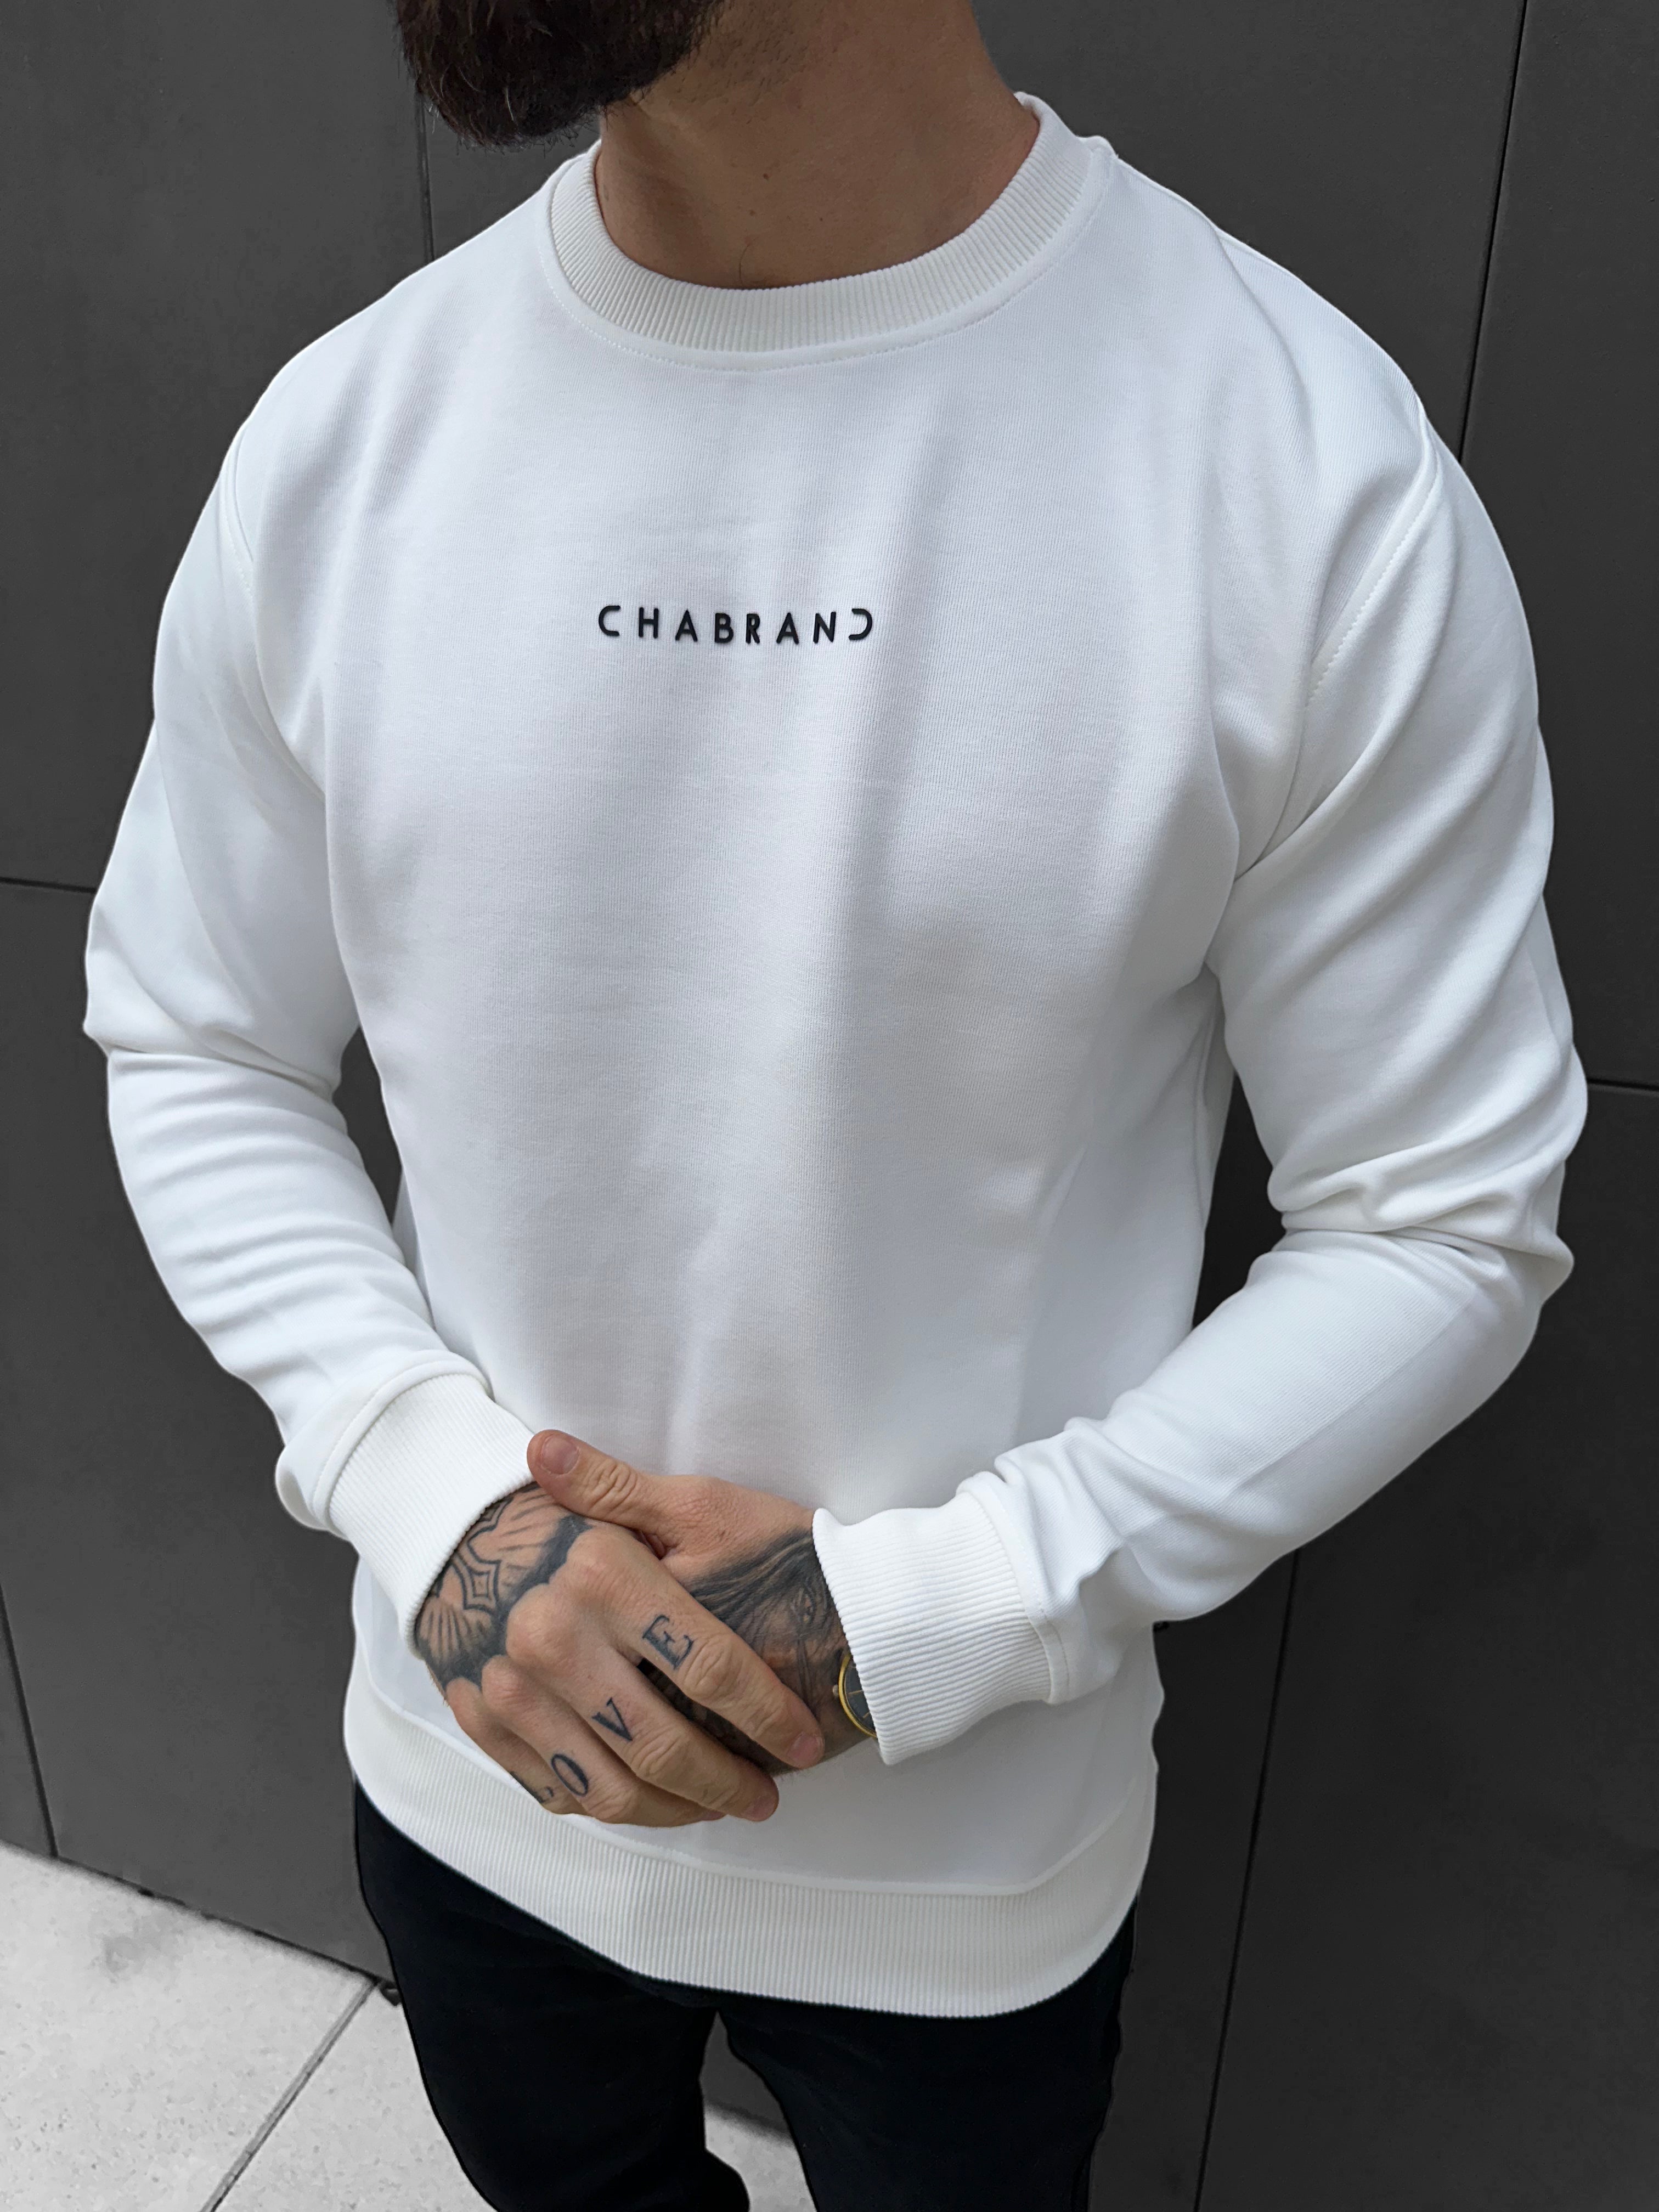 CHABRAND - White sweatshirt with black chabrand logo